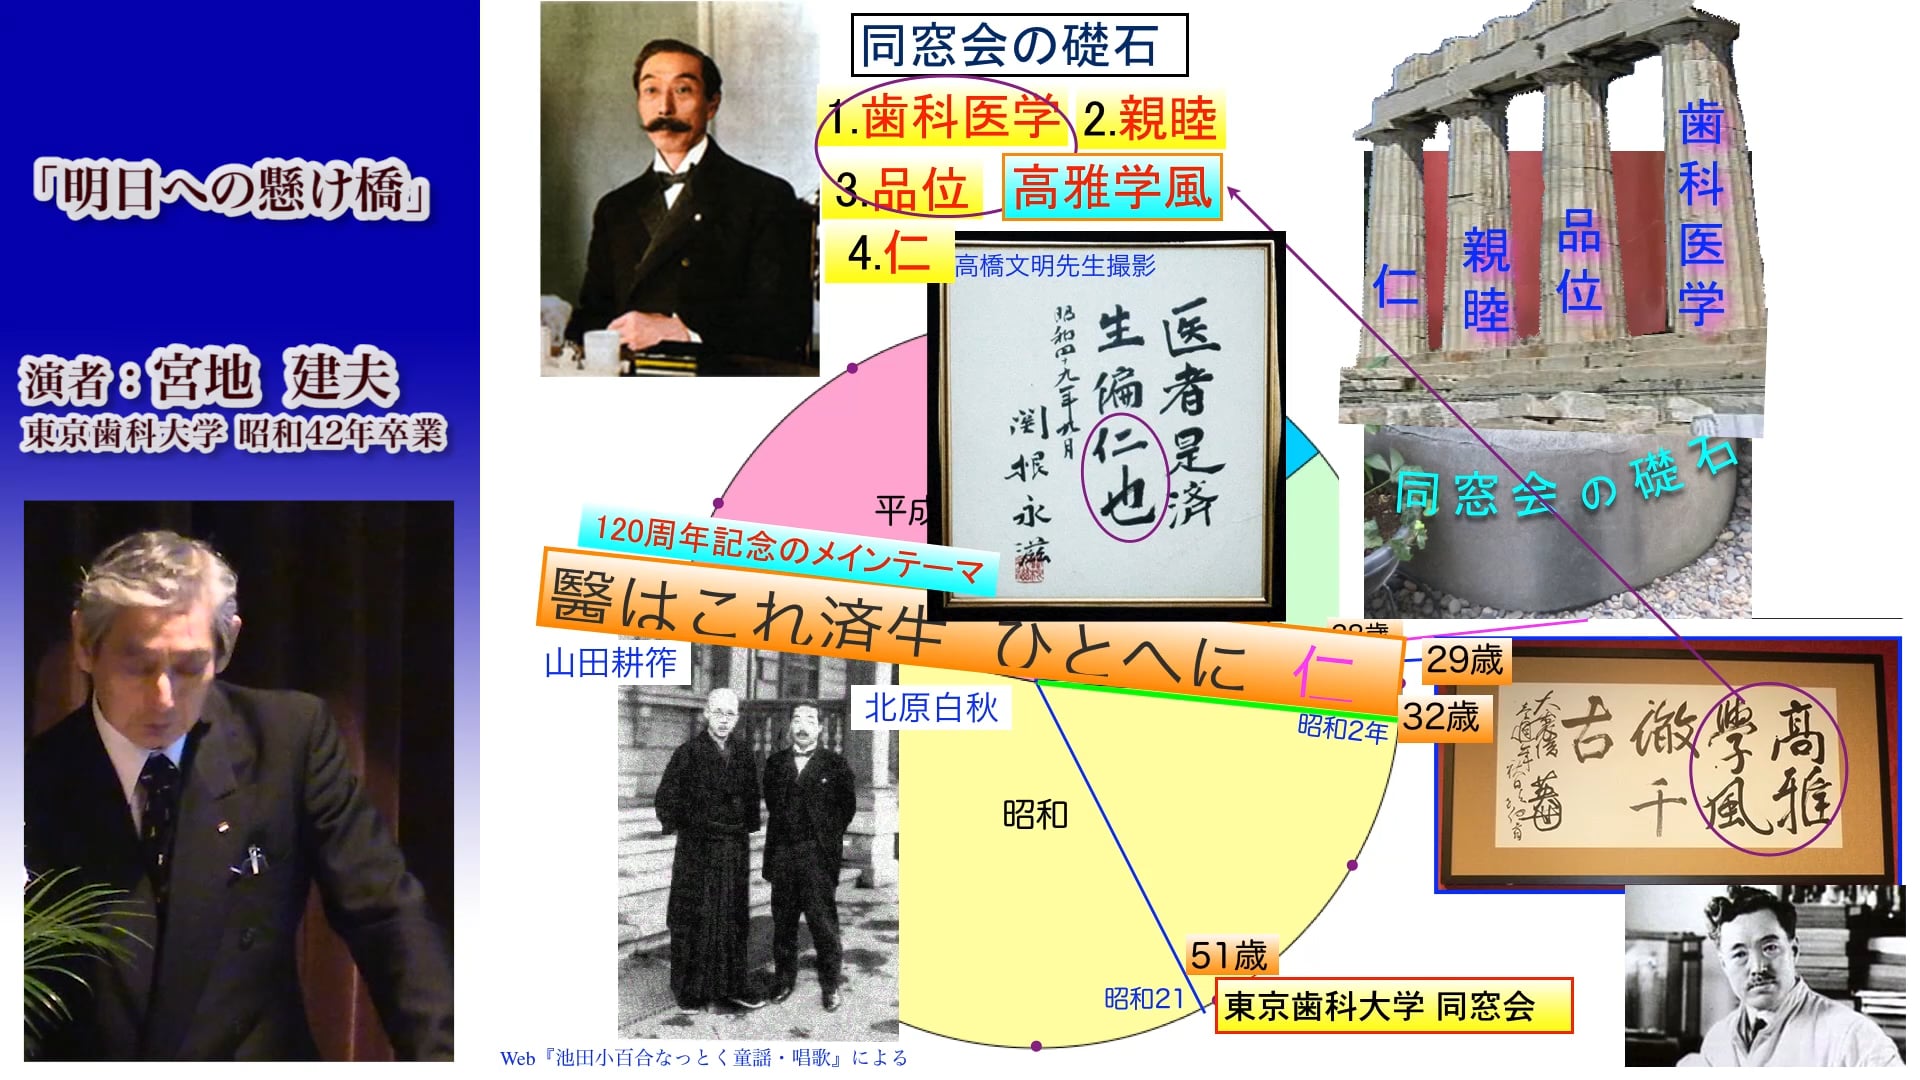 東京歯科大学同窓会120周年記念講演会：宮地建夫先生ご講演「明日への架け橋」